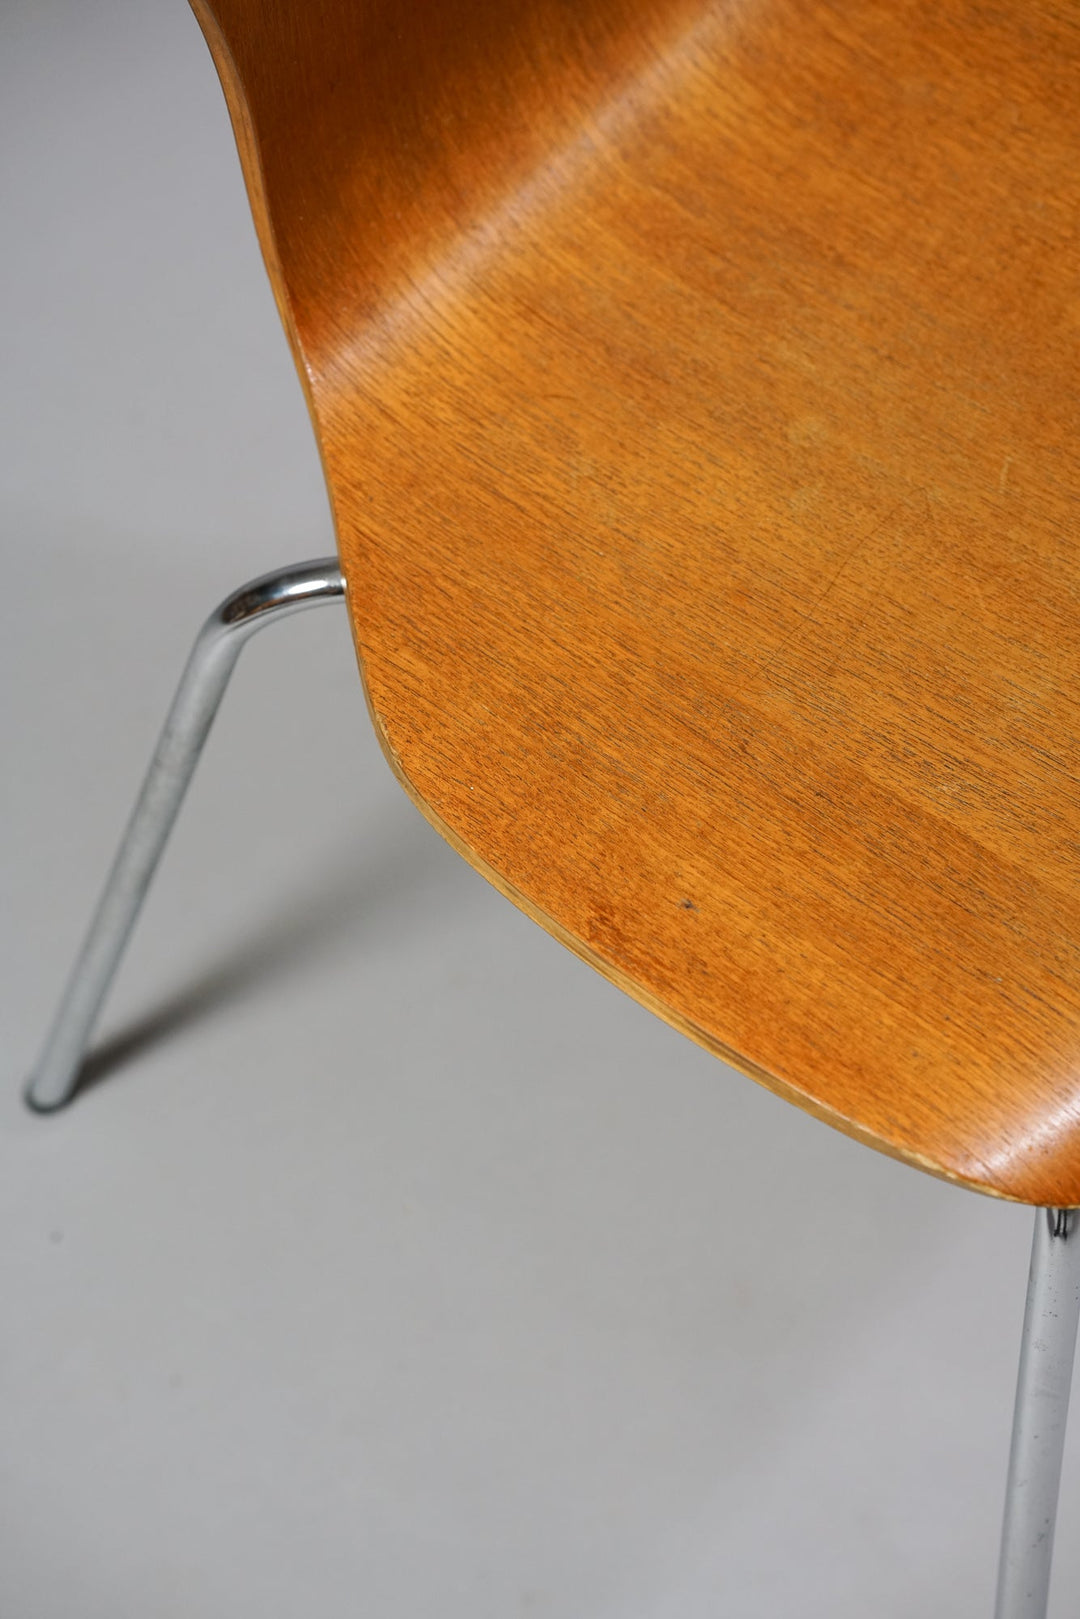 Model Nikke chairs (4 pcs), Tapio Wirkkala, Asko, 1950s